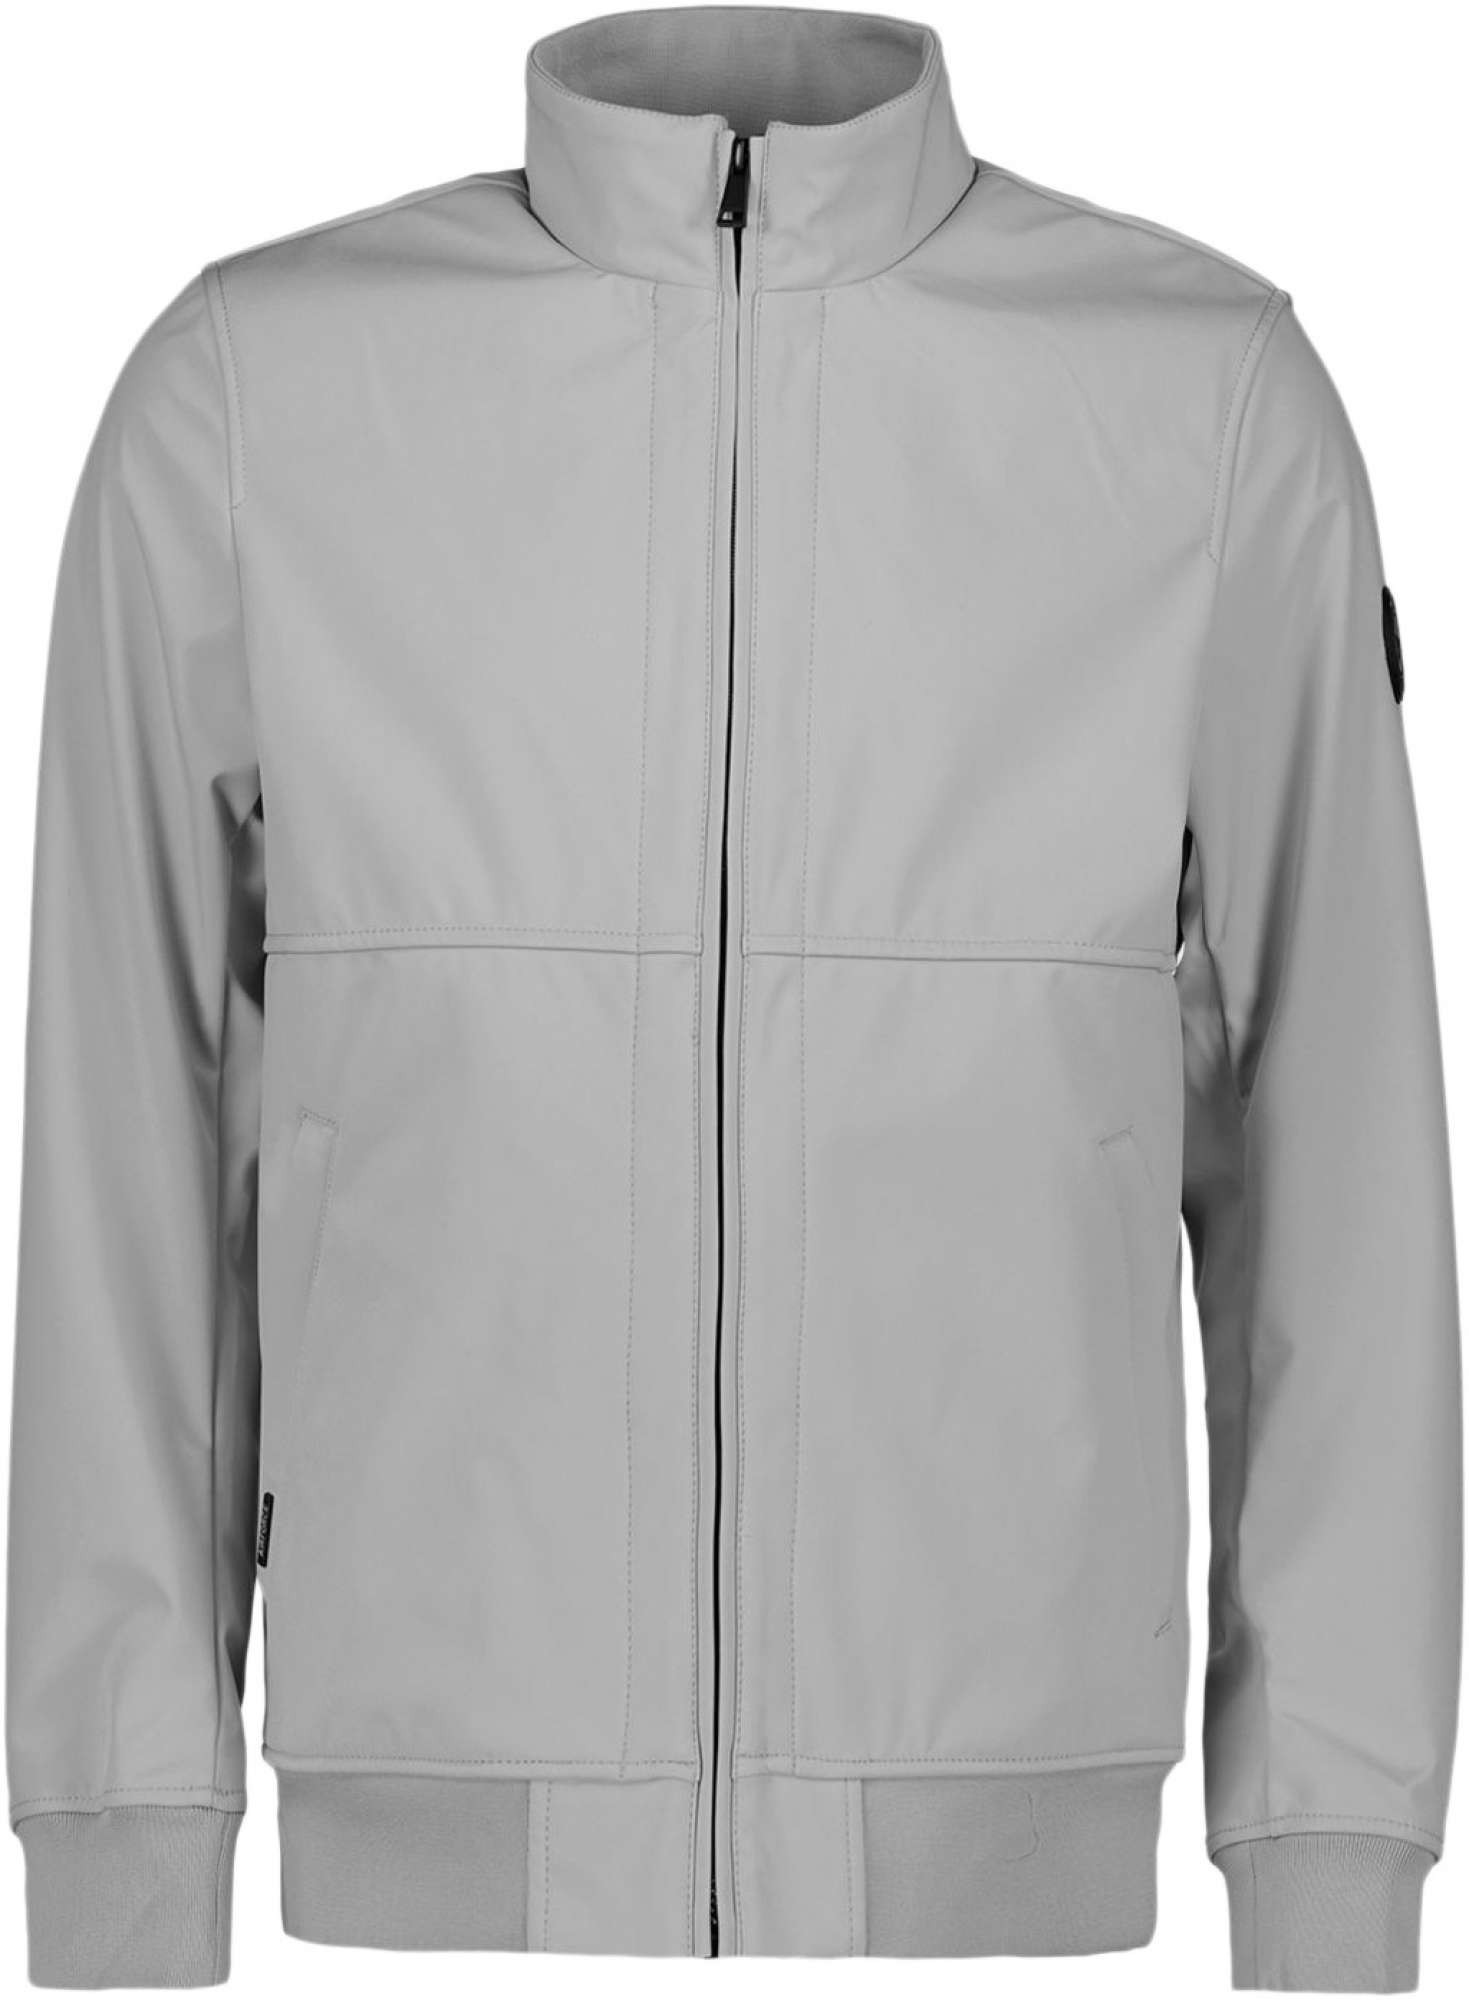 Afbeelding van Airforce Softshell jacket paloma grey